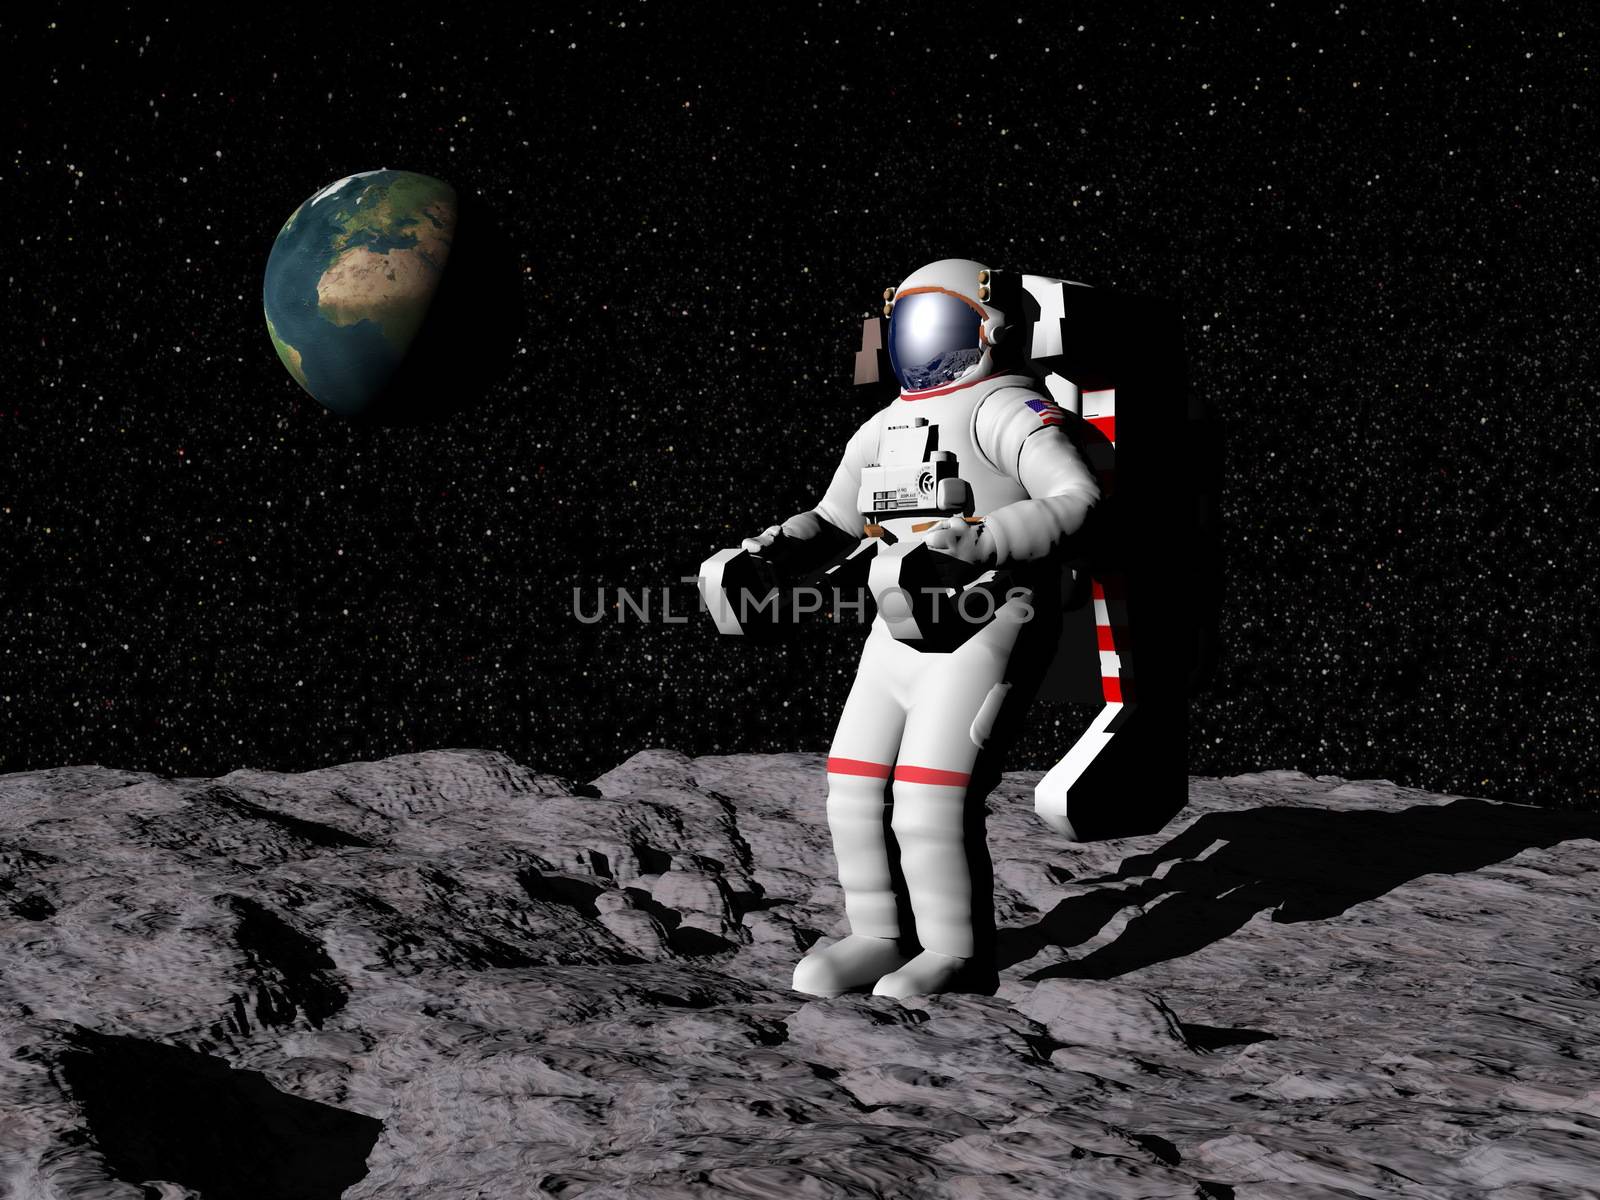 Man on the moon - 3D render by Elenaphotos21